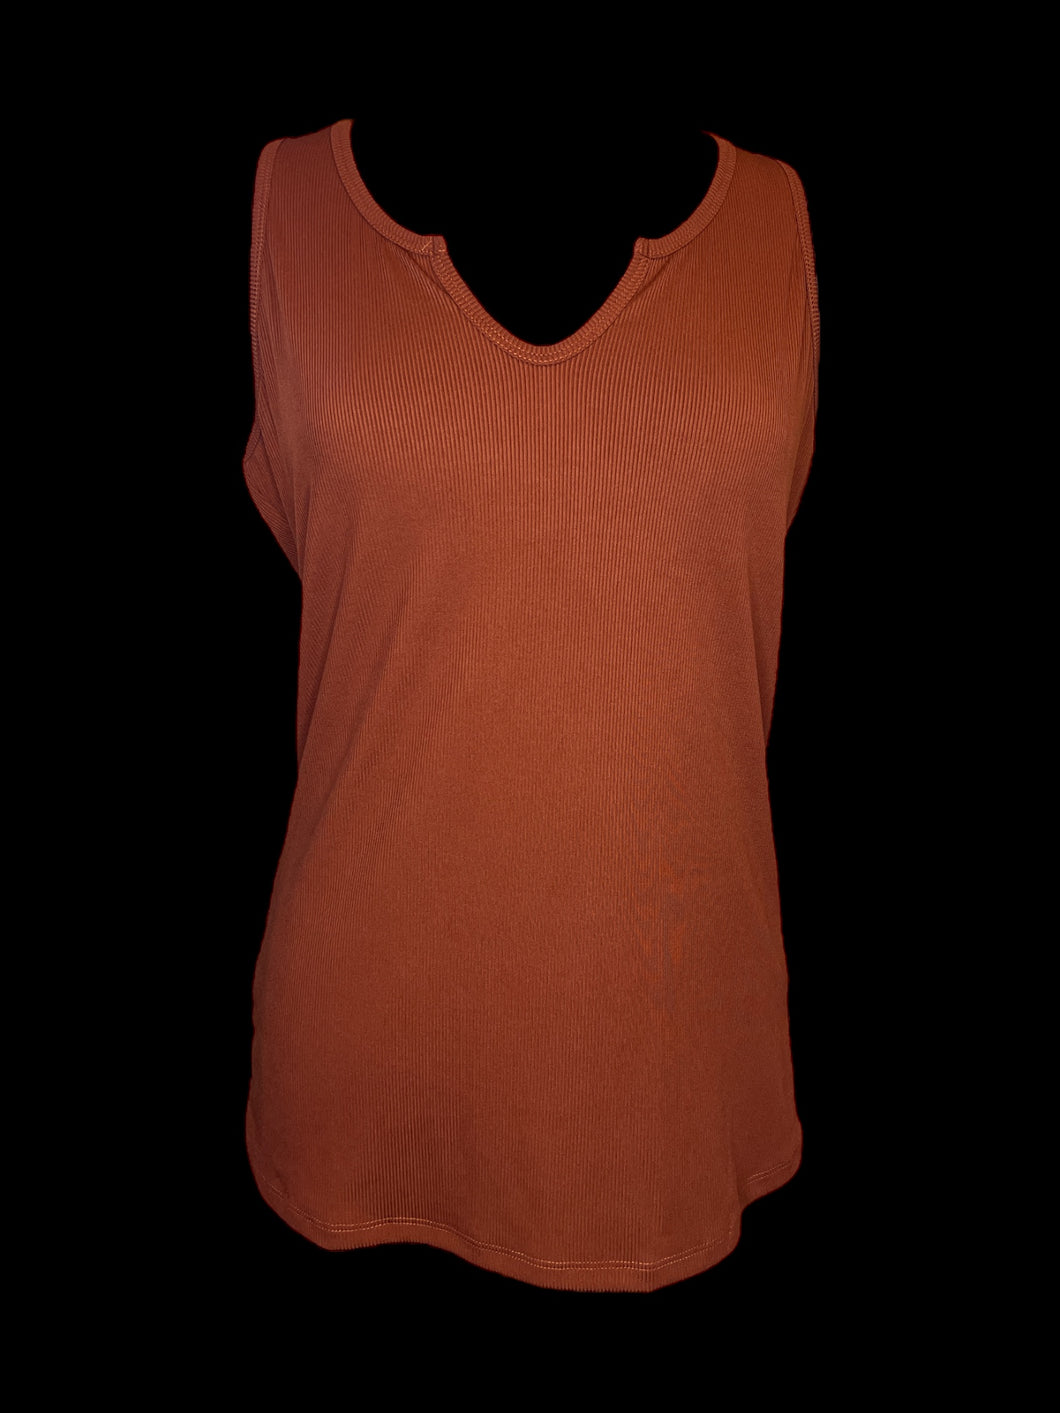 L Burnt orange sleeveless notch neckline rib knit top